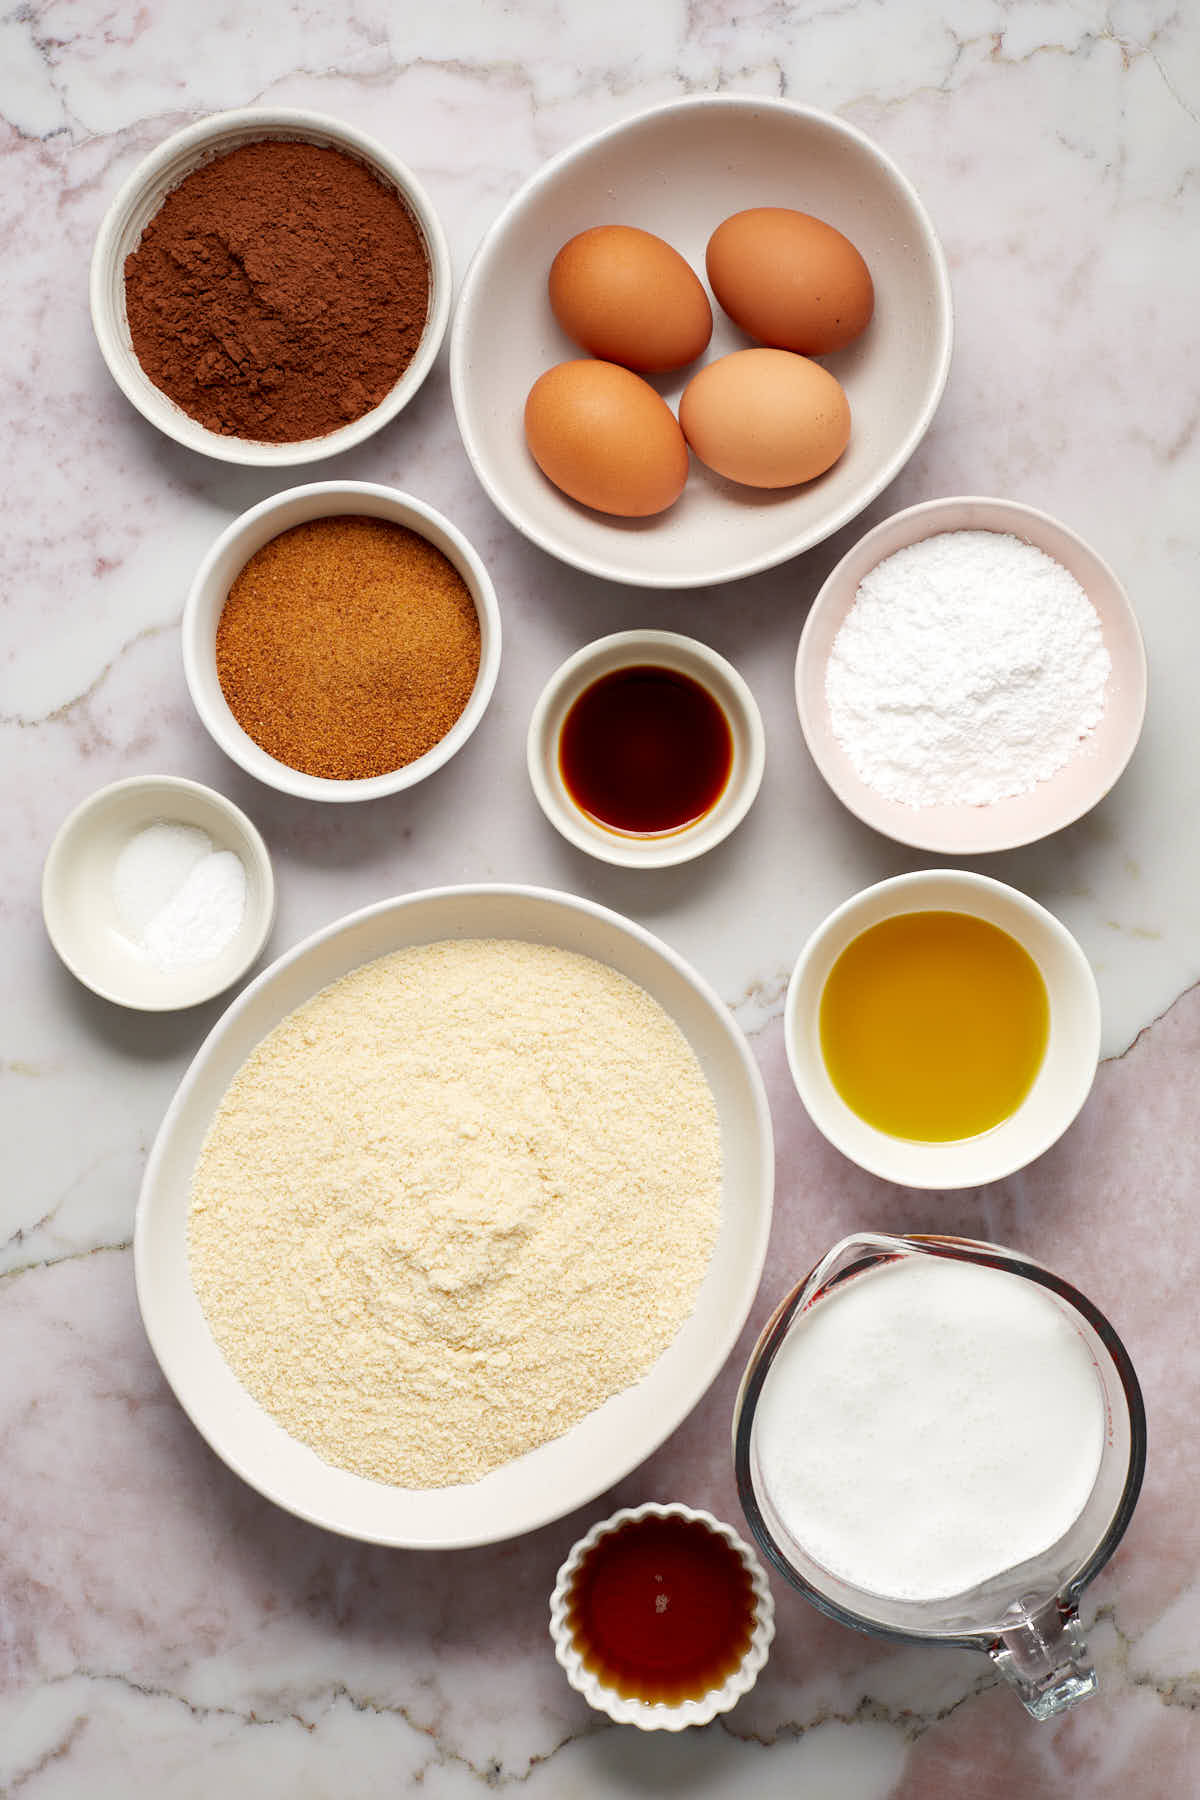 Ingredients to make almond flour chocolate cake arranged in individual bowls.